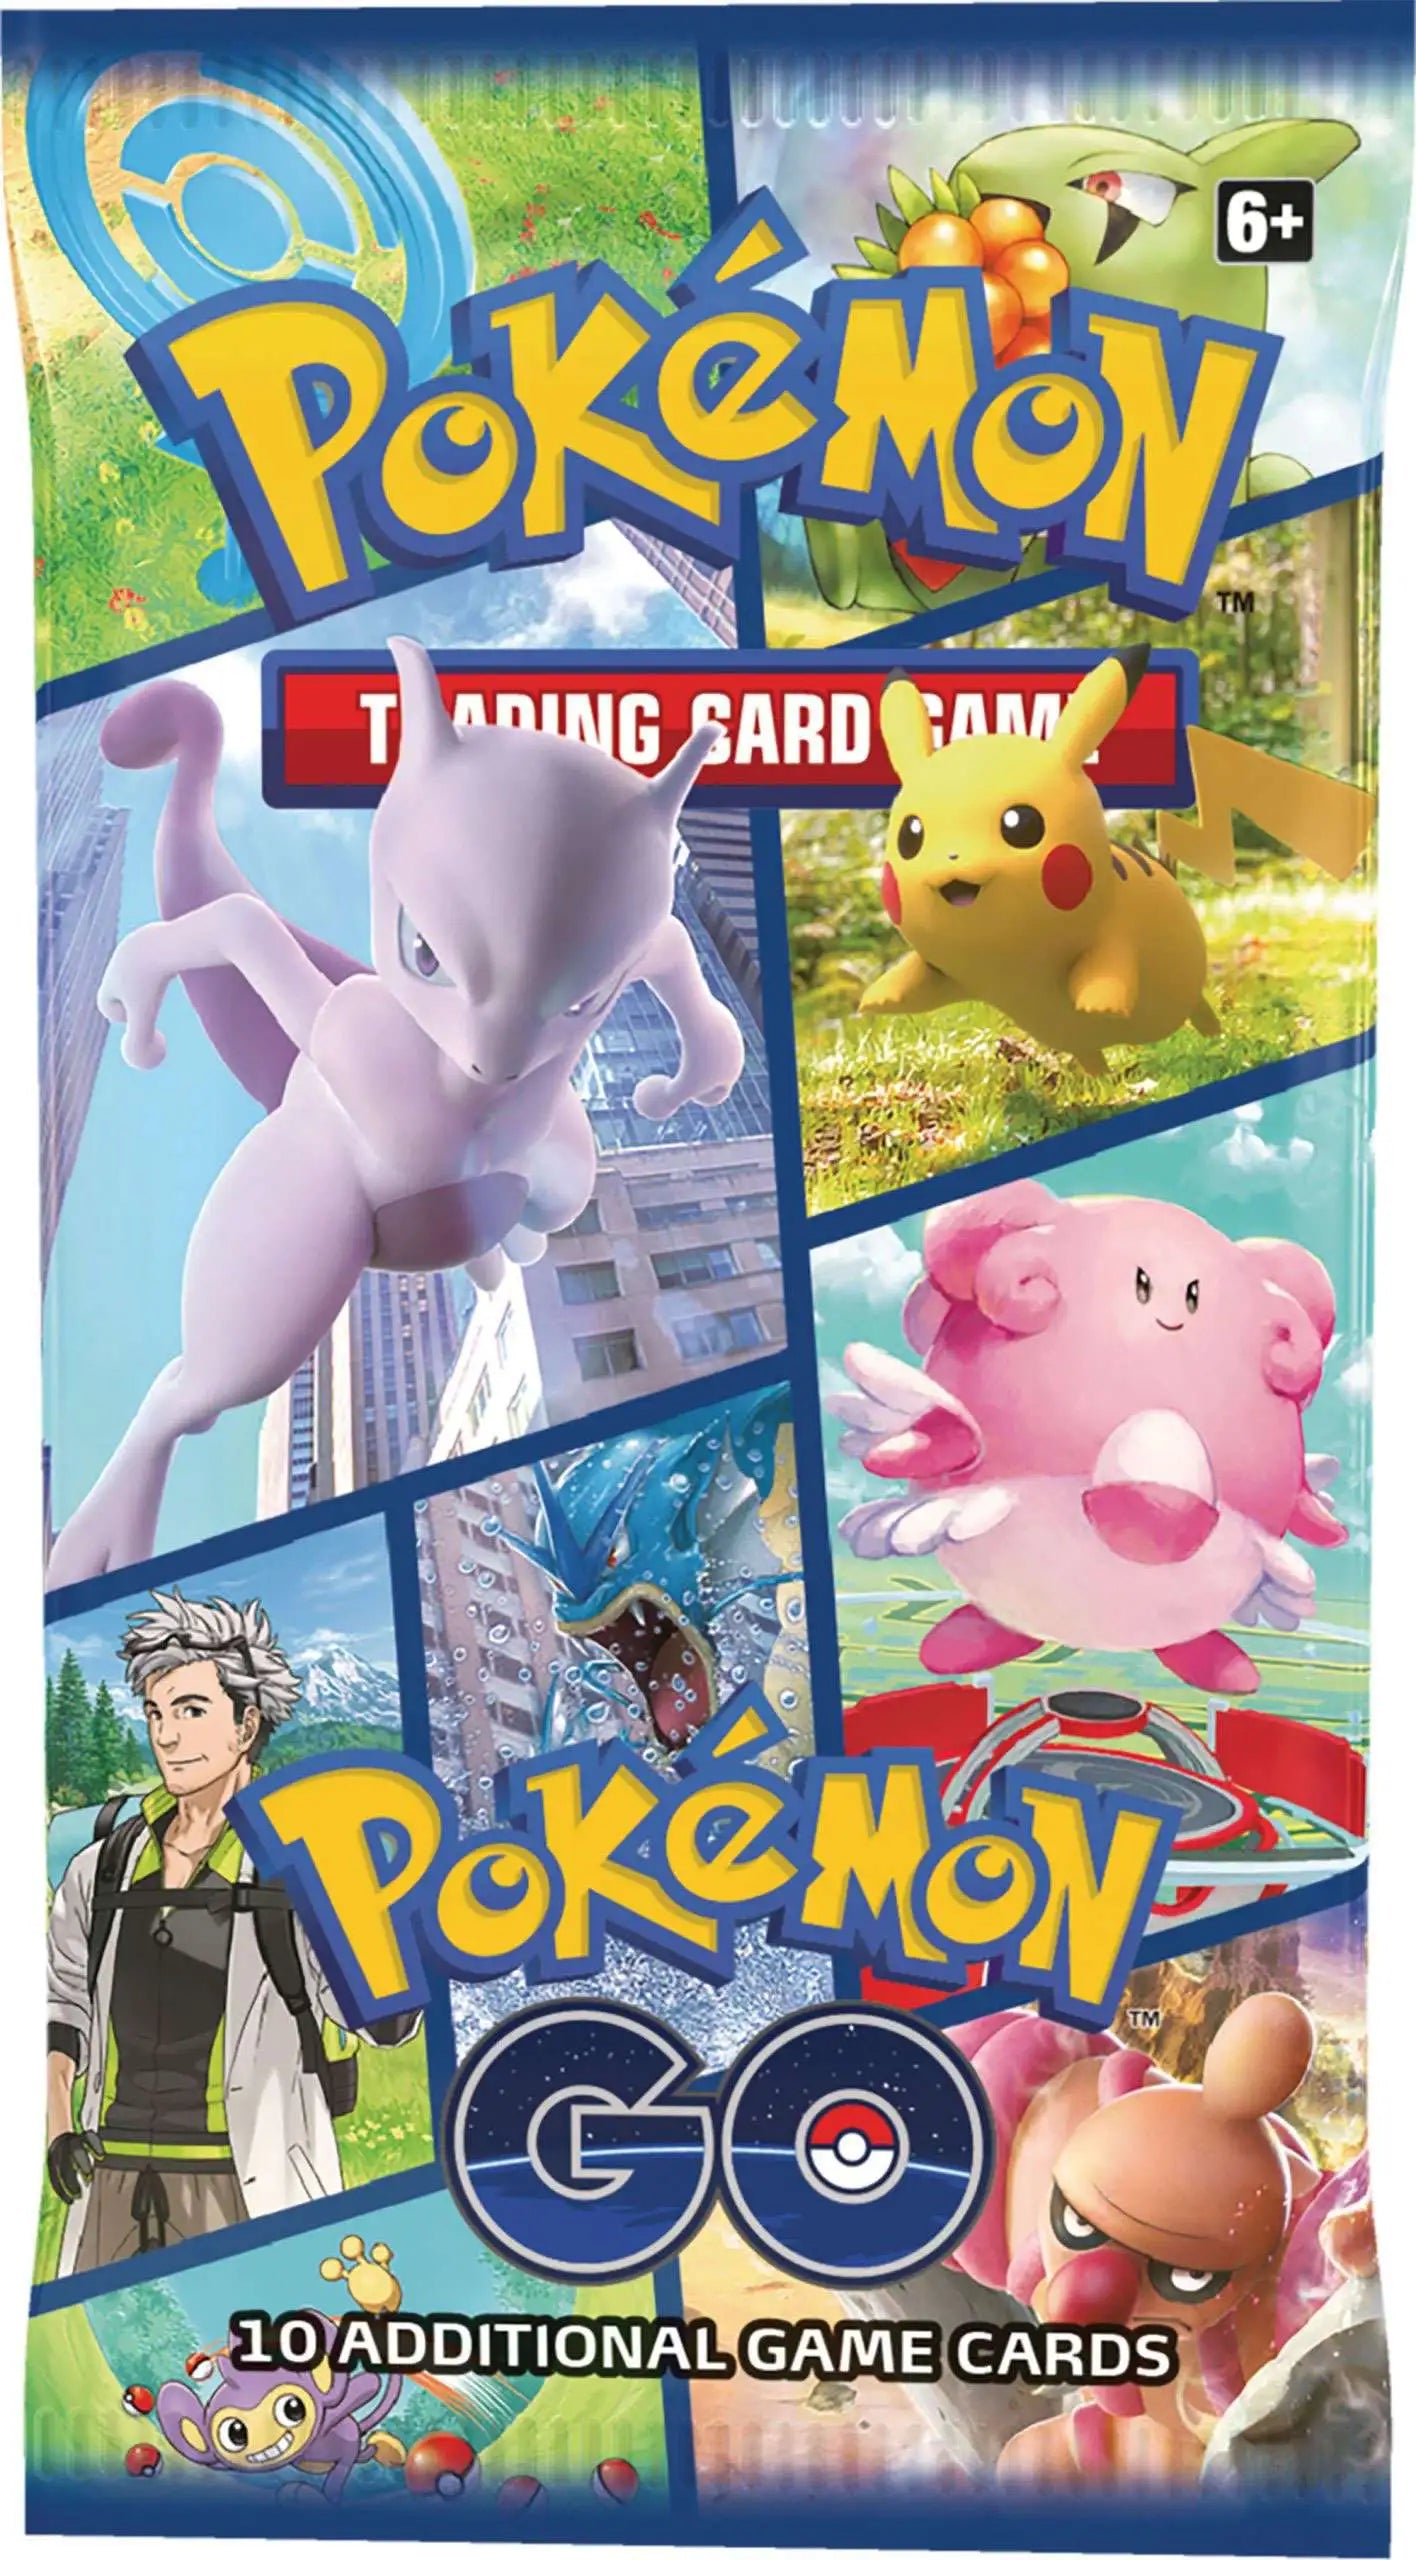 Pokémon TCG: Pokémon GO Booster Packs